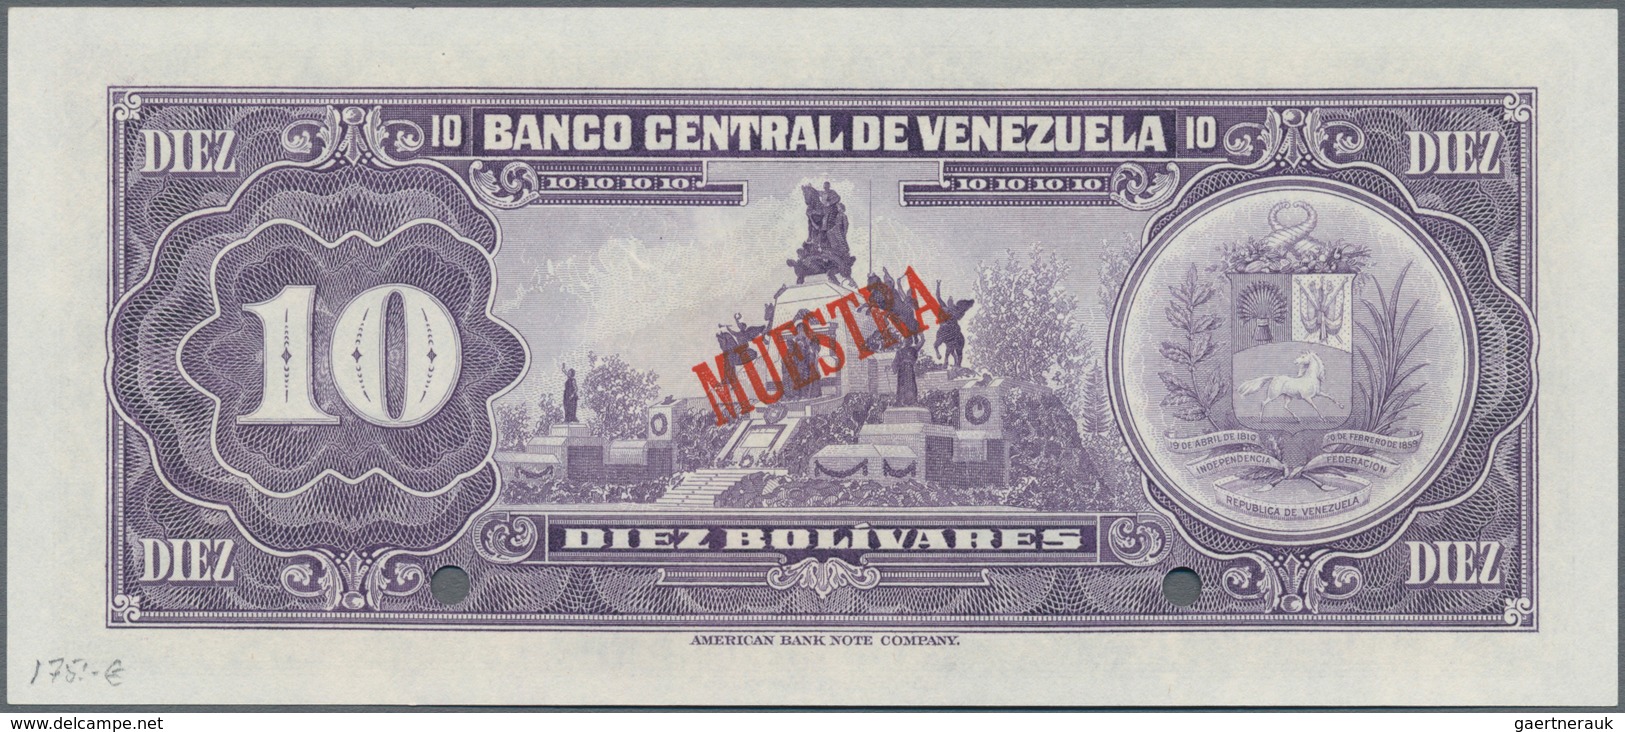 Venezuela: 10 Bolivares April 11th 1972 SPECIMEN, P.51bs In UNC Condition. - Venezuela